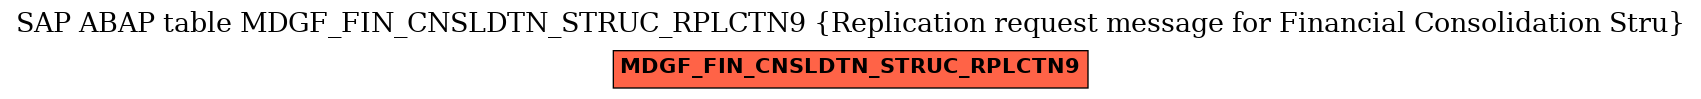 E-R Diagram for table MDGF_FIN_CNSLDTN_STRUC_RPLCTN9 (Replication request message for Financial Consolidation Stru)